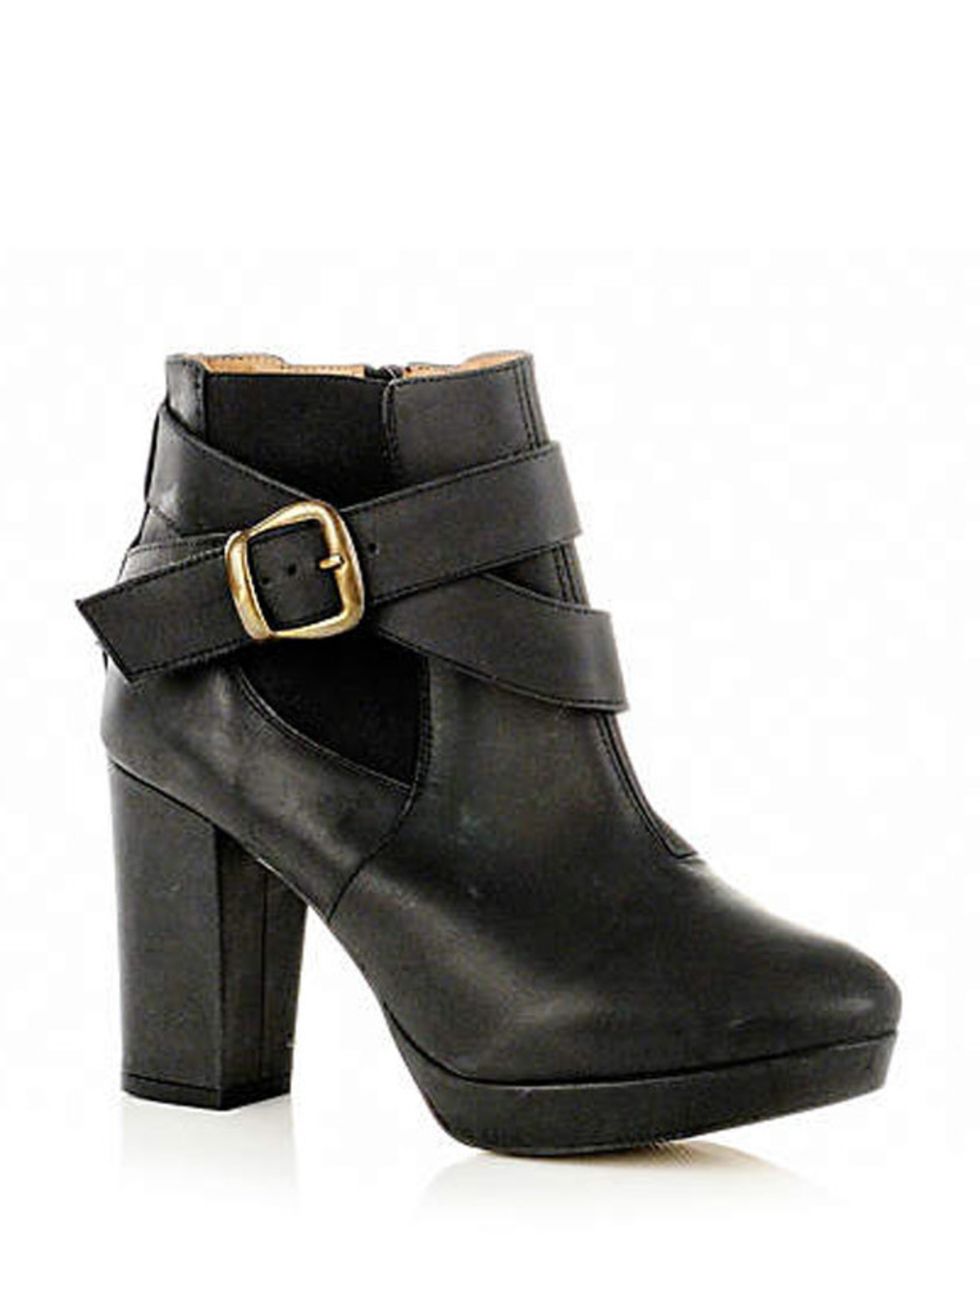 <p><a href="http://www.riverisland.com/Online/women/shoes--boots/ankle-boots/black-strap-ankle-boots-615172">River Island</a> black ankle boots, £75</p>